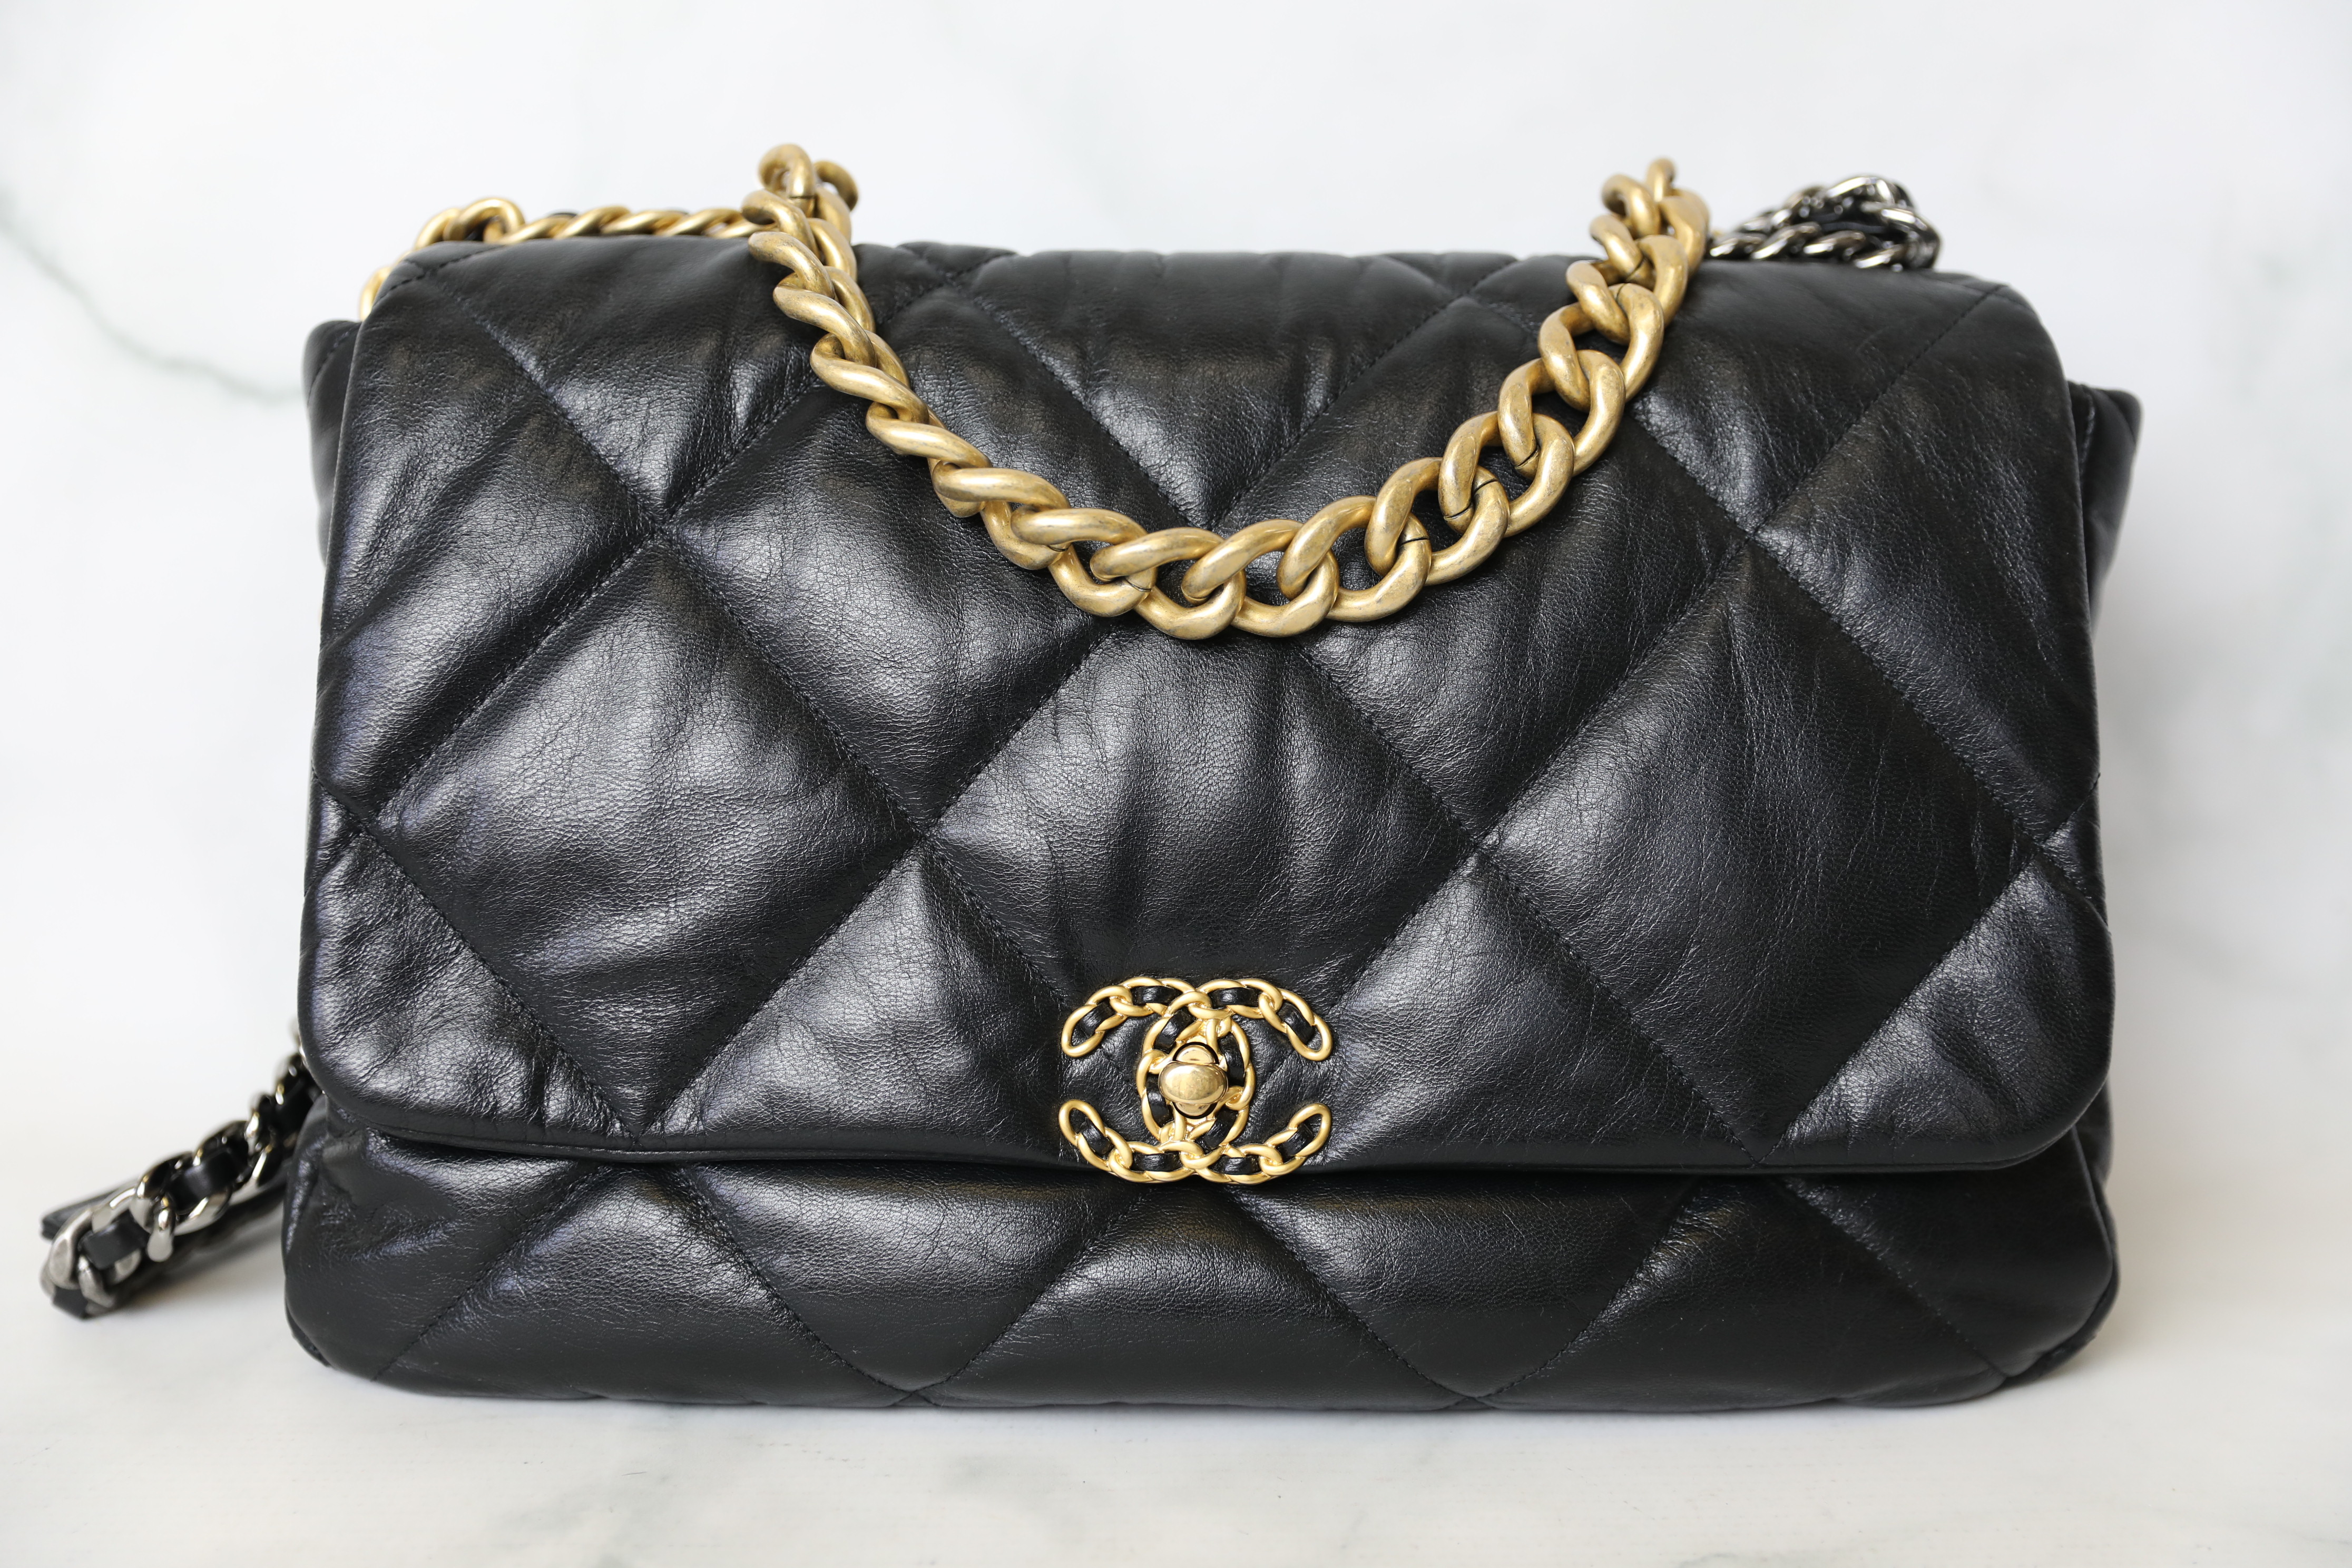 Chanel 19 Large Black, New in Dustbag - Julia Rose Boston